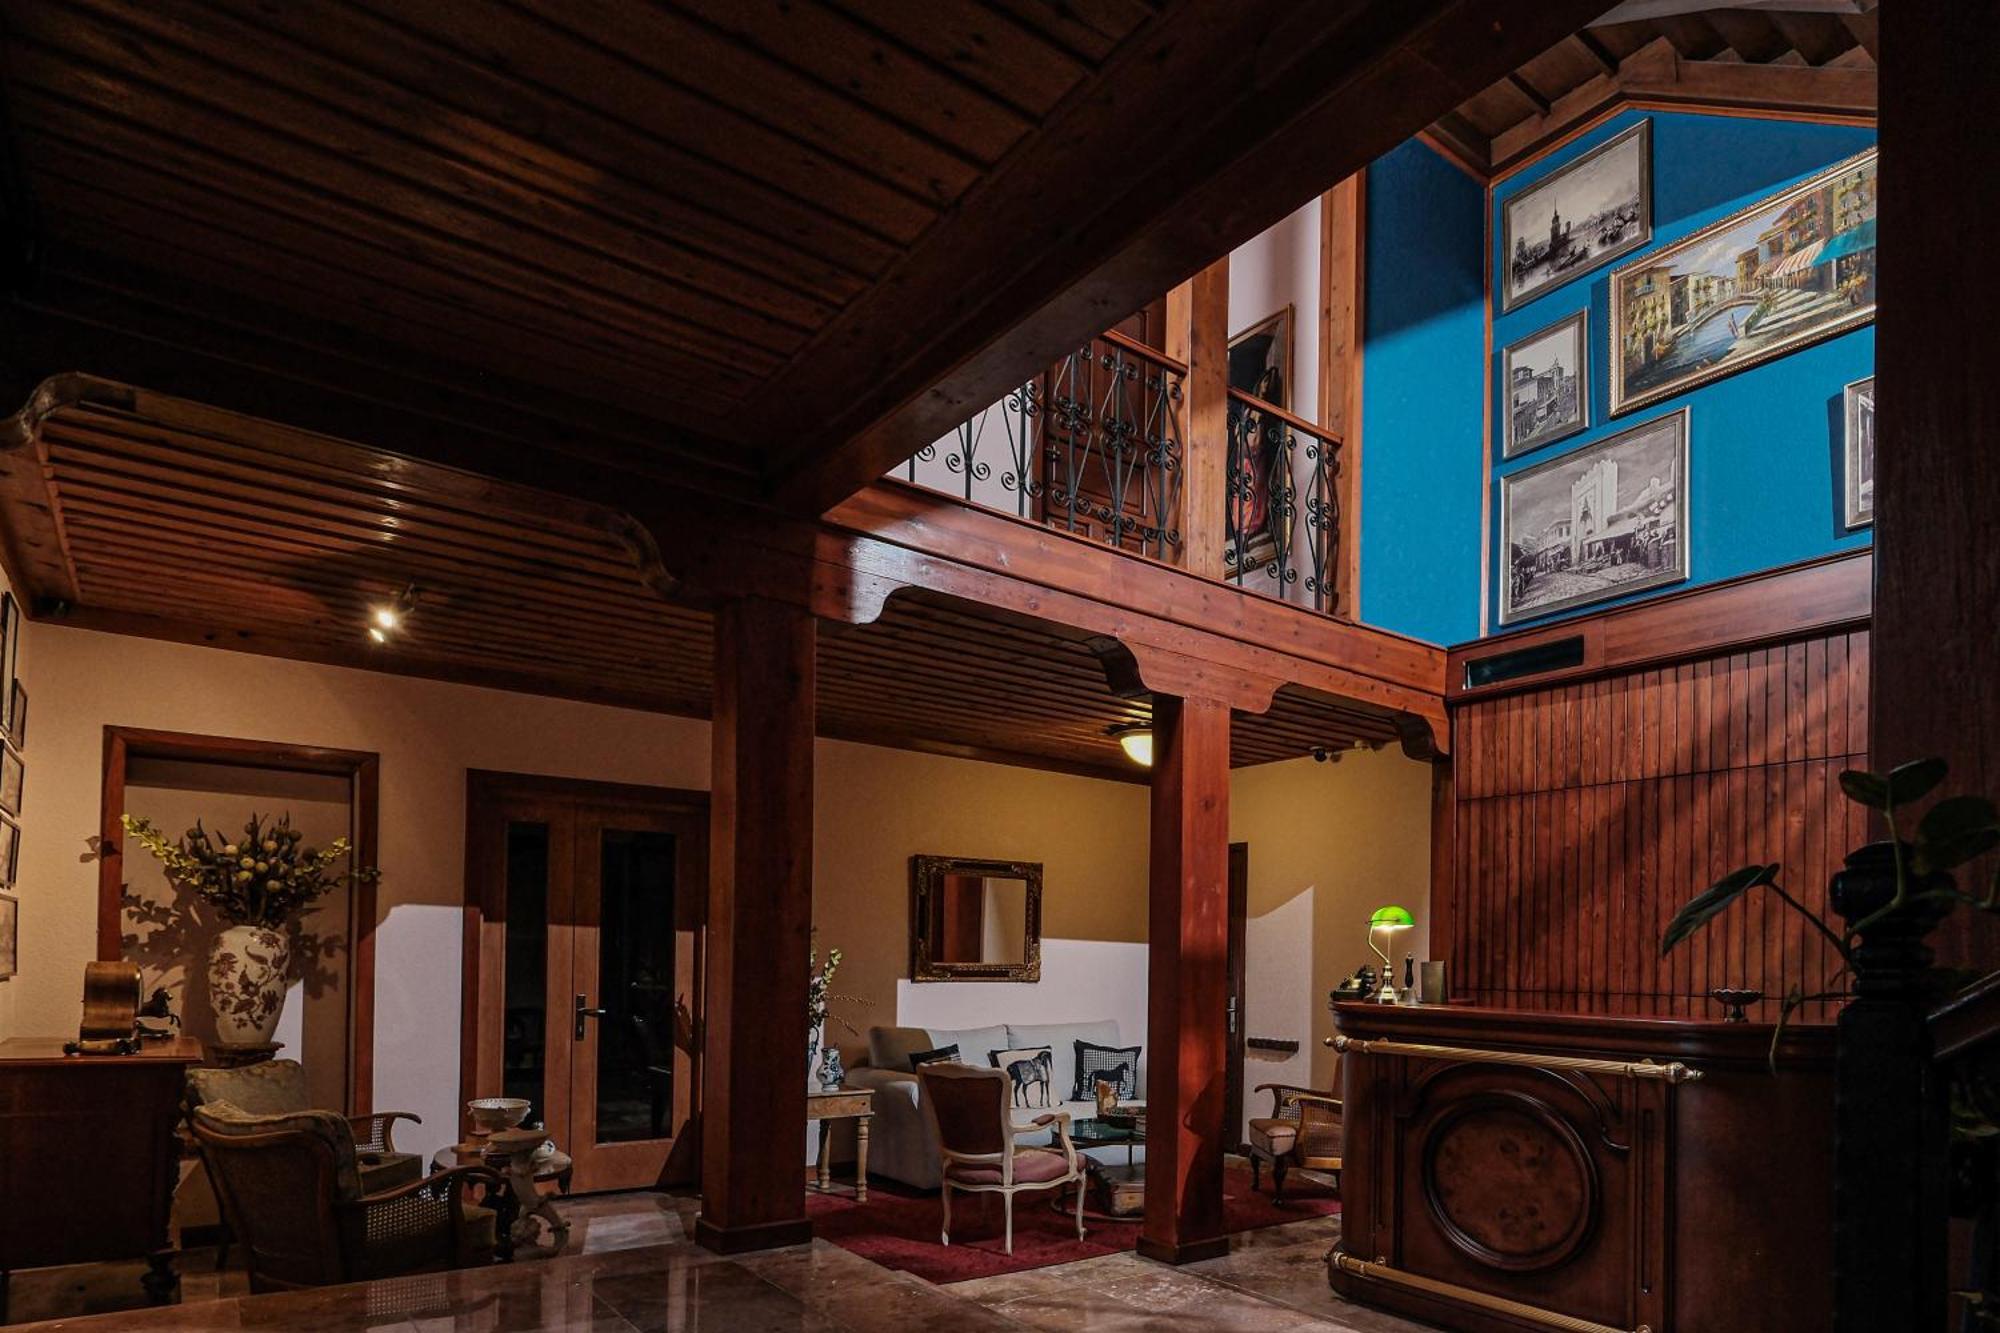 Hotel Bosnali Adana Buitenkant foto